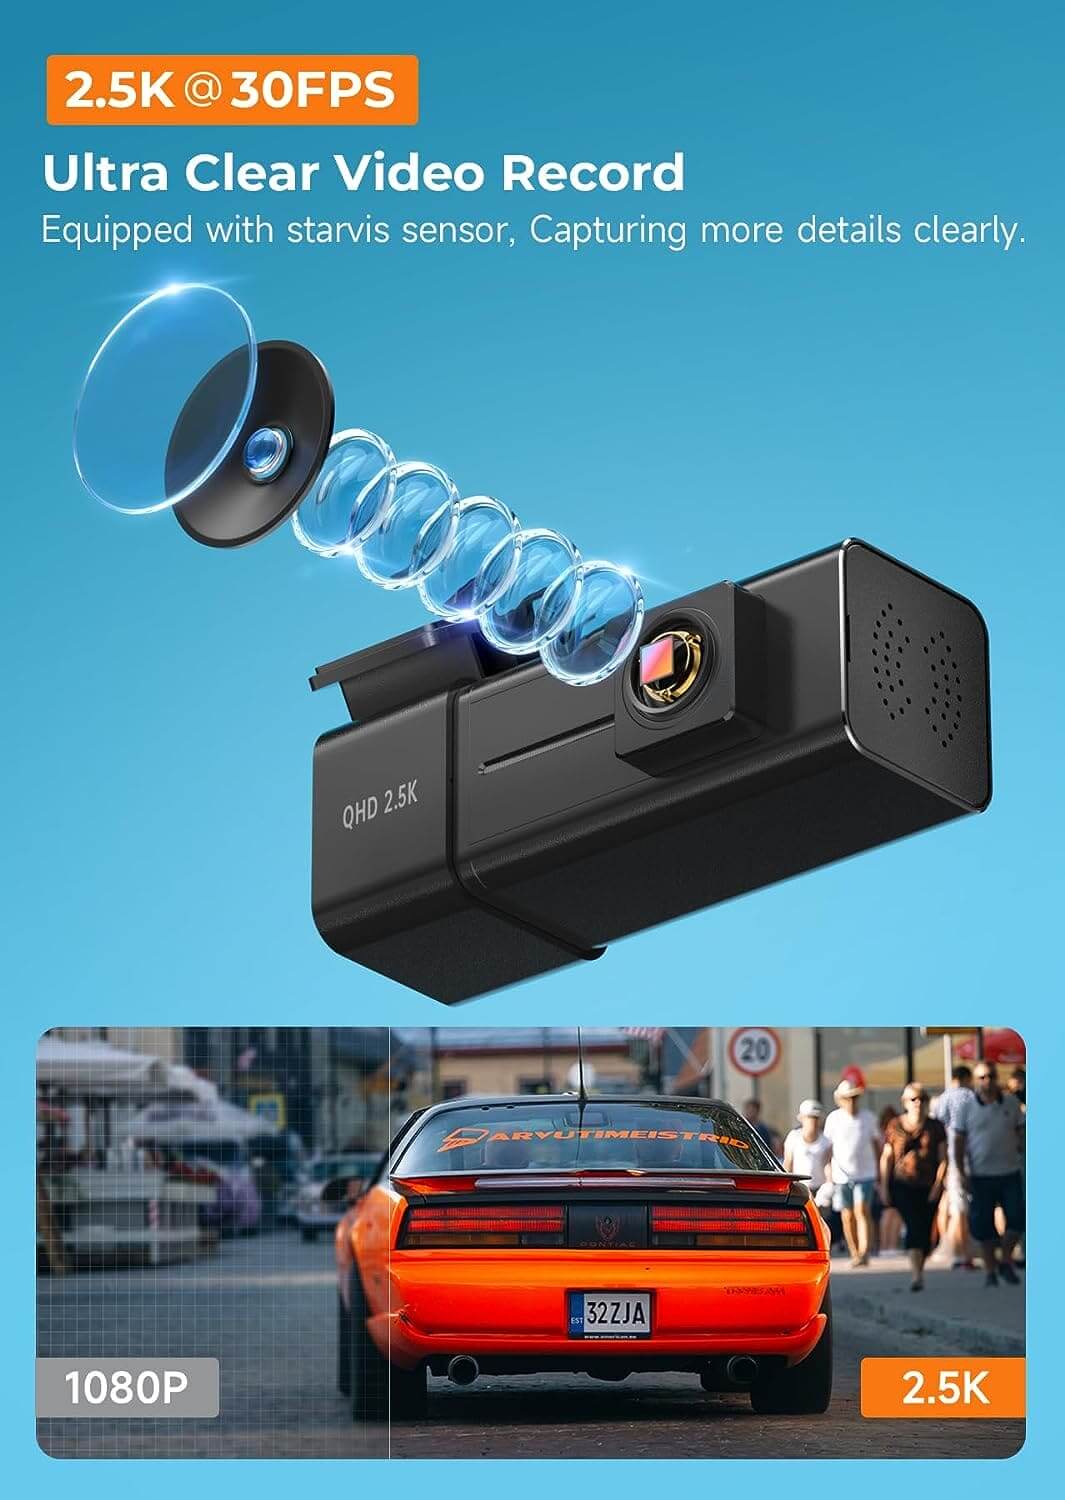 Dash Cam WiFi 2.5K Car Camera, E-YEEGER Front Dash Camera for Cars, Mini Dashcams with App, Night Vision, G-Sensor, Loop Recording, 24H Parking Mode, Free 32G SD Card, Support 256GB Max (Black) - LDAS ELECTRONICS